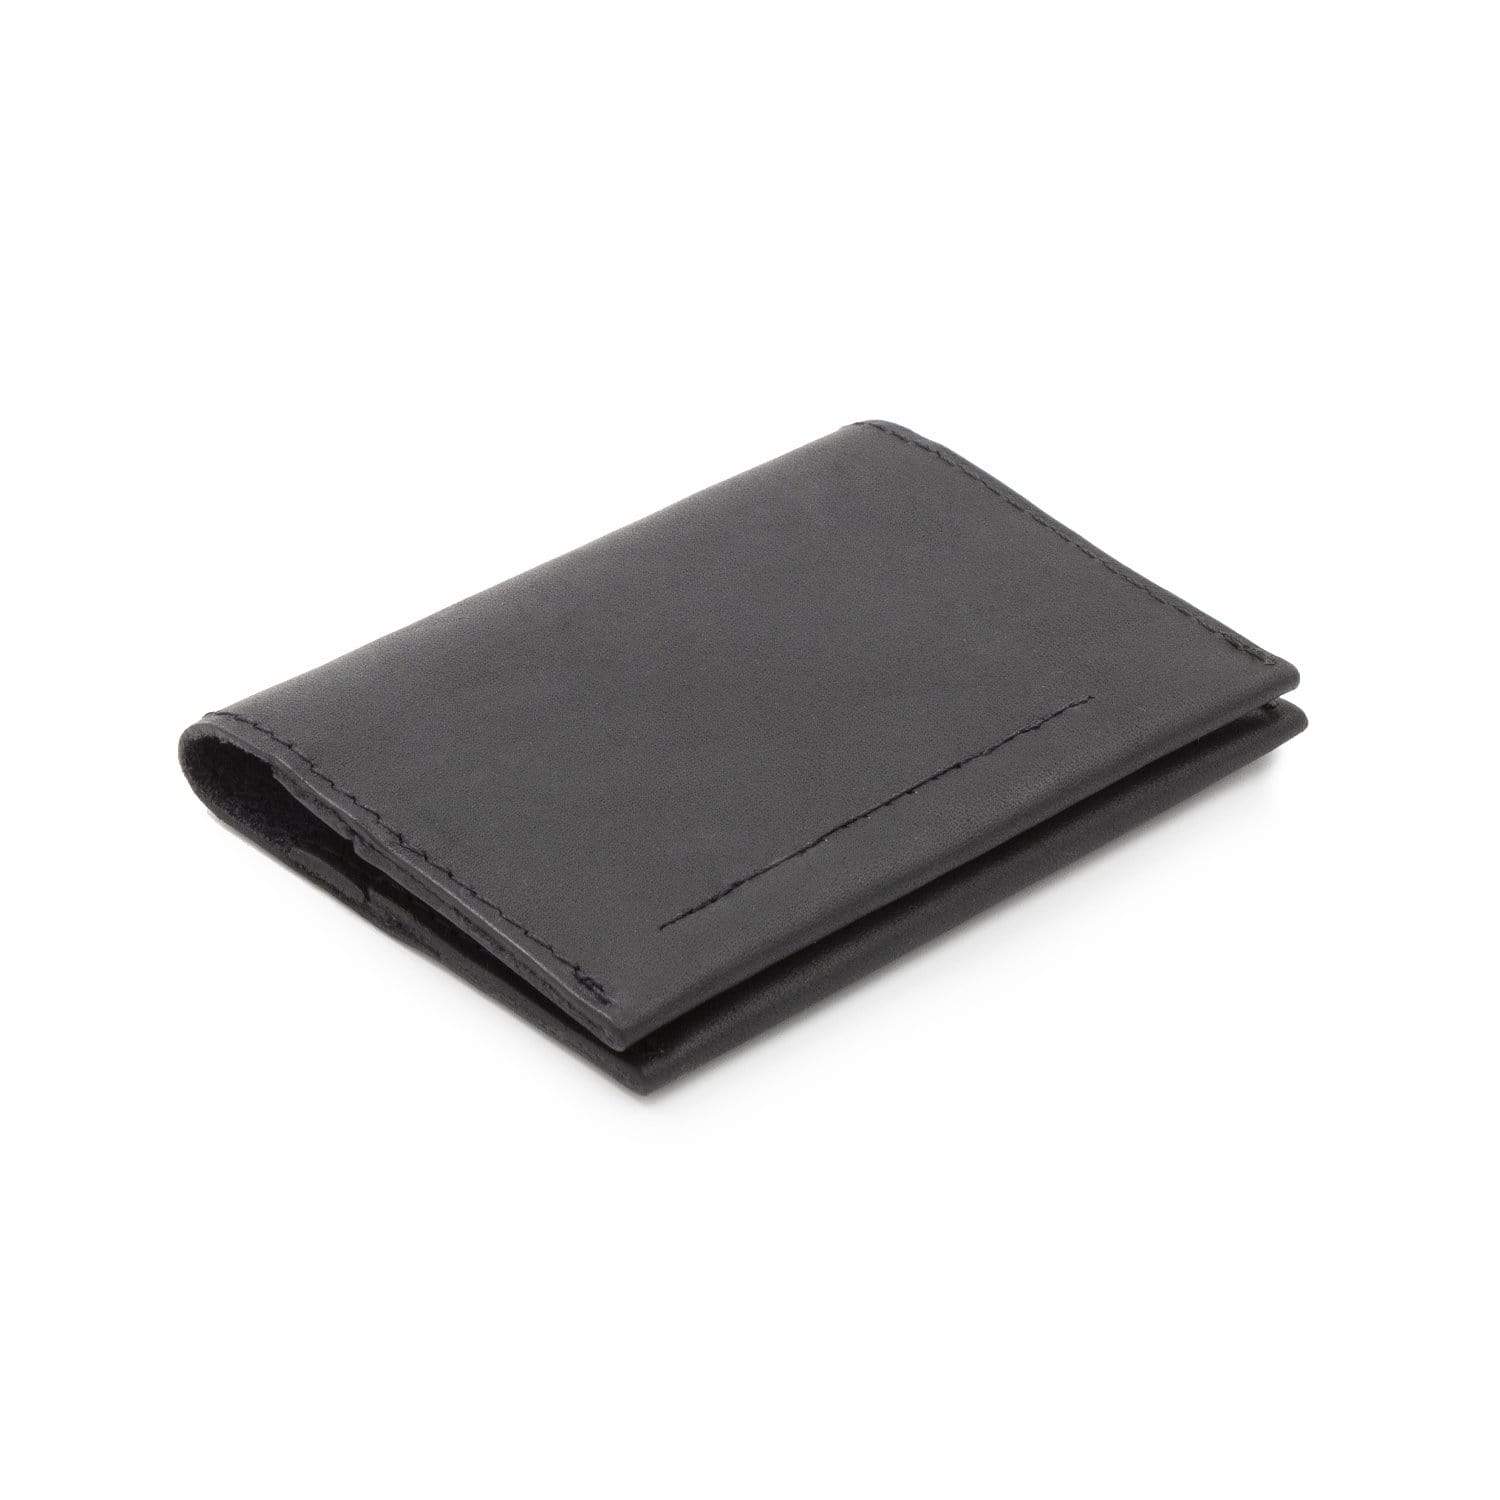 Women's Slim Leather Card Case Holder